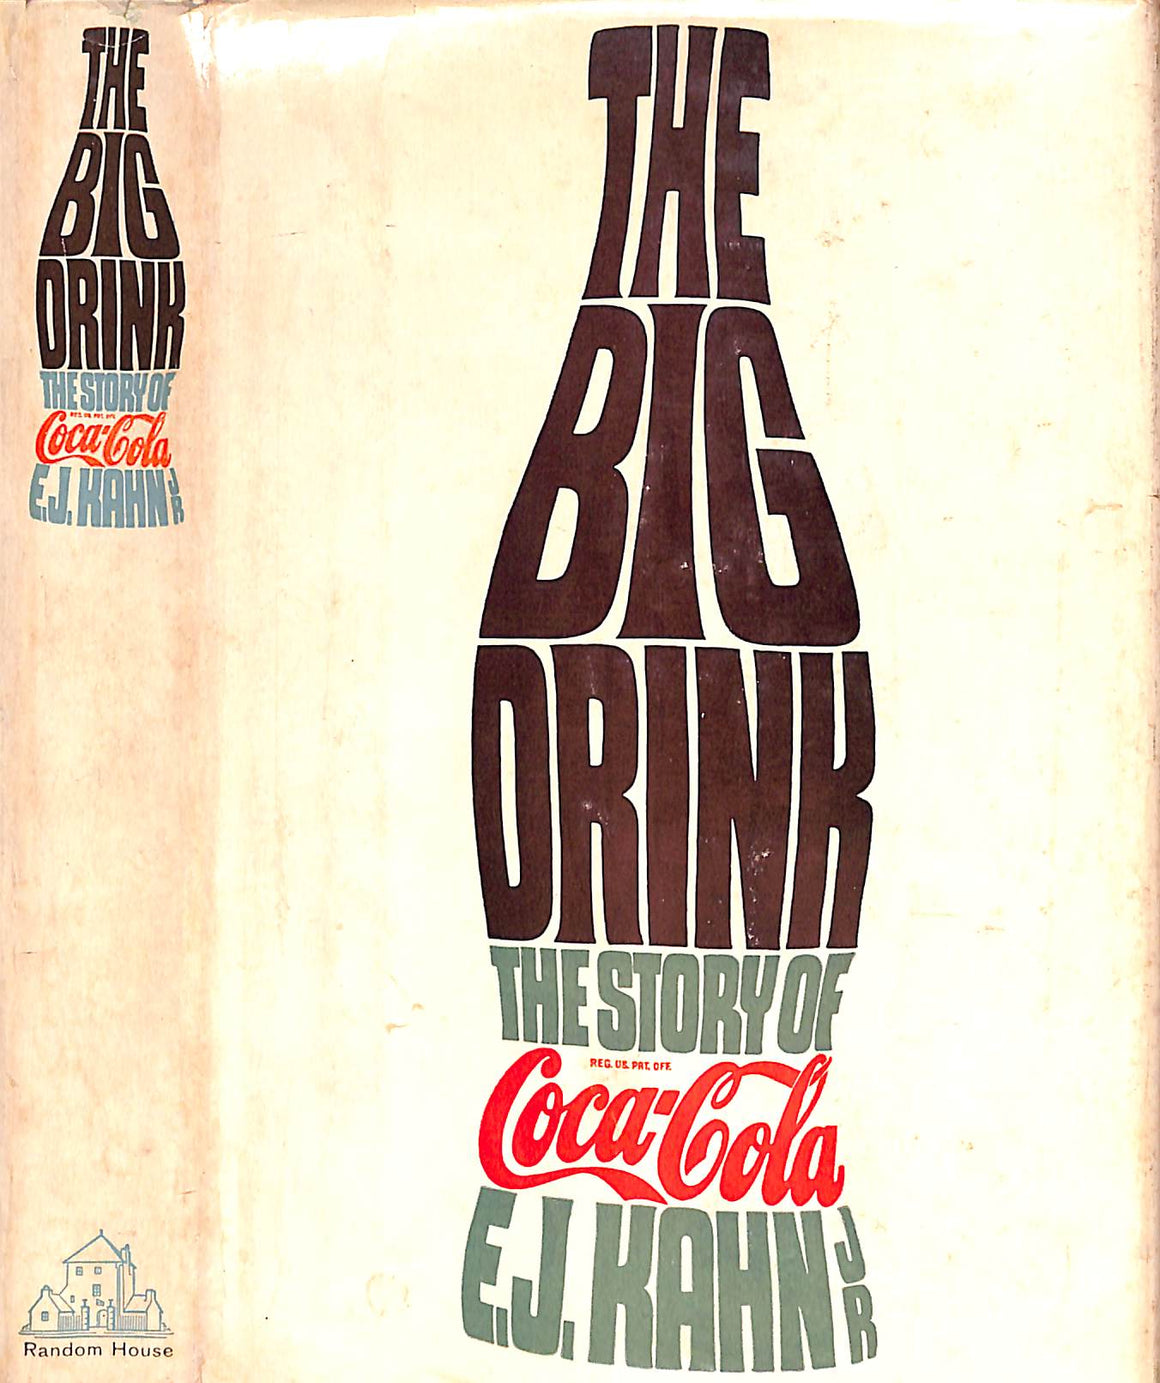 The Big Drink" 1960 KAHN, E.J. Jr.